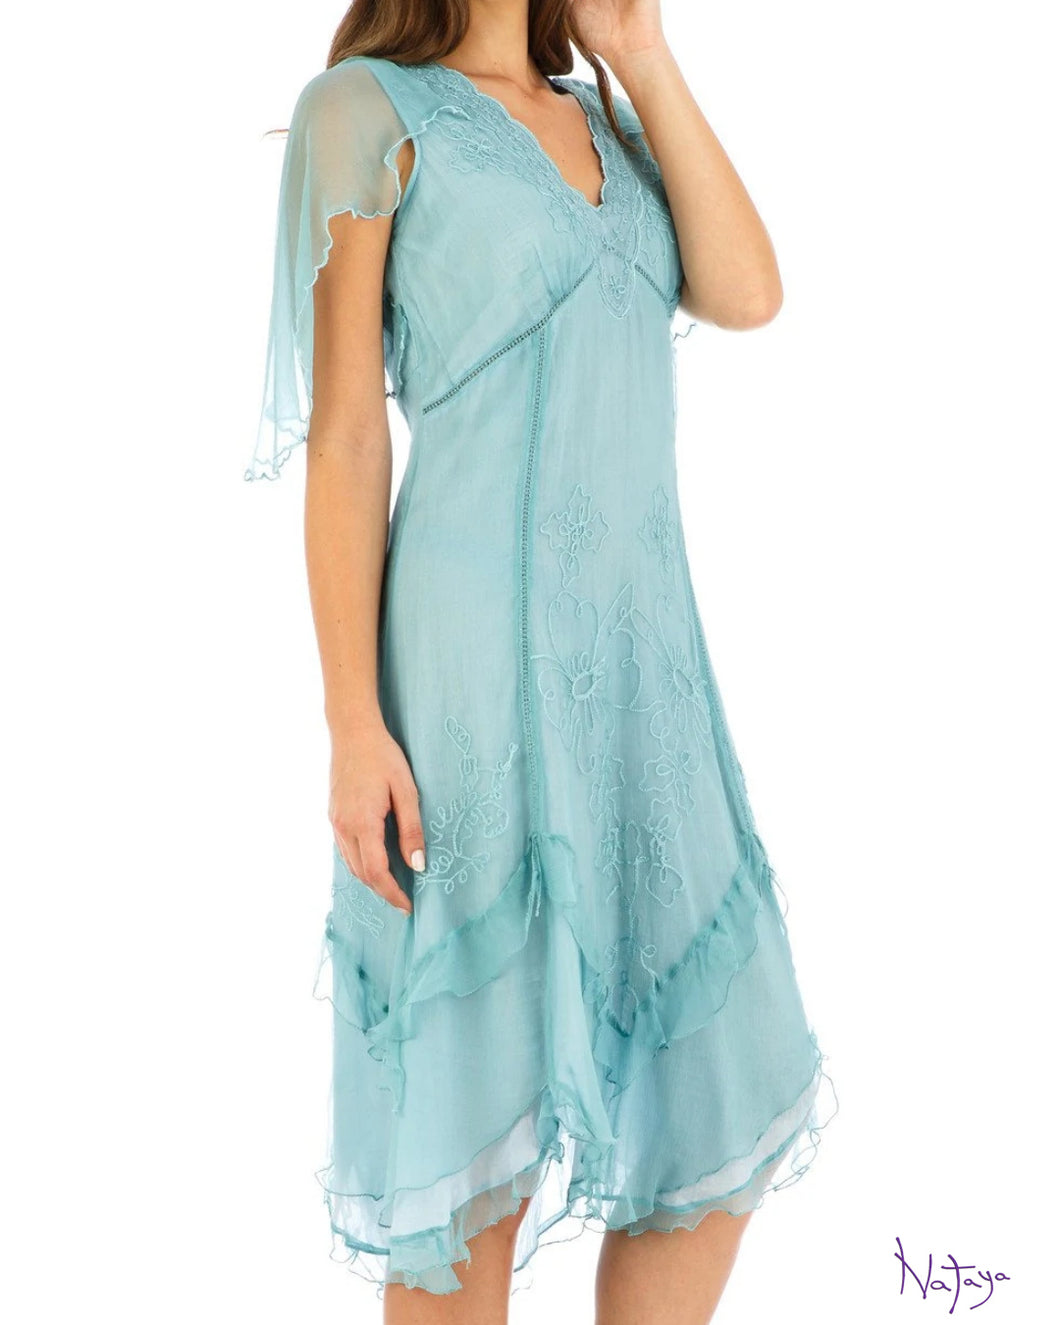 nataya age of love 1920s turquoise day dress sm/m/lg sm